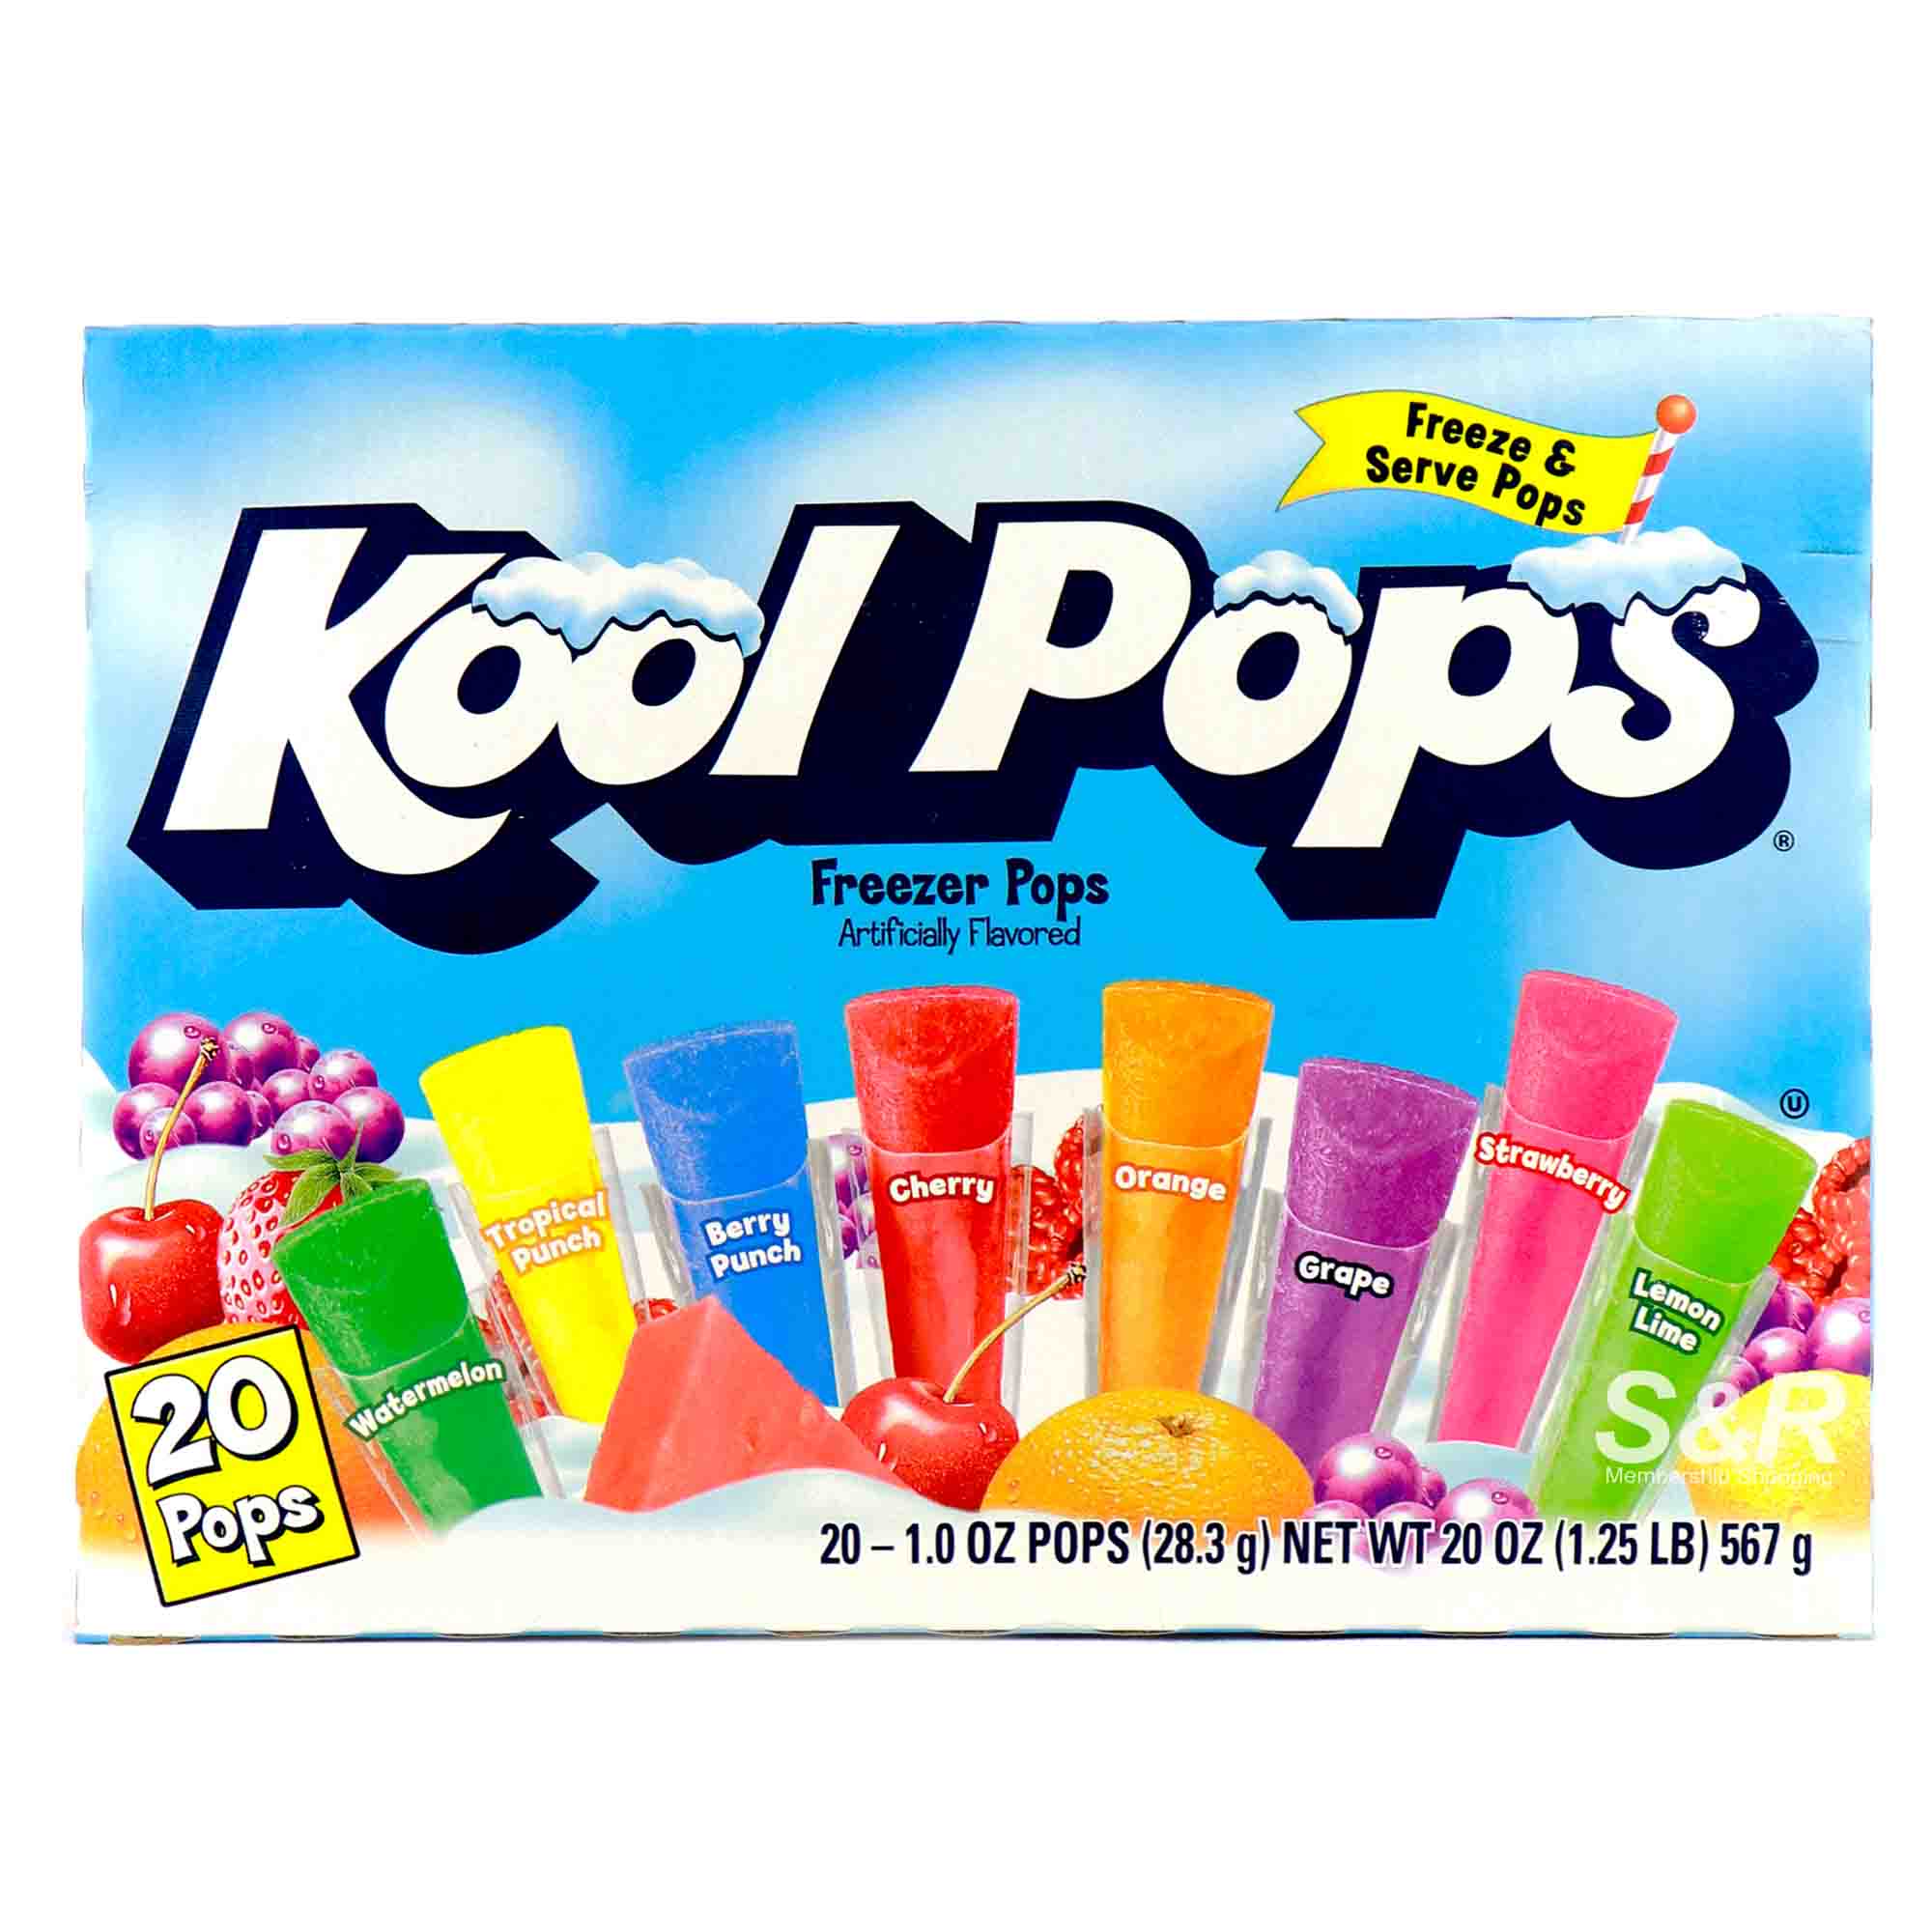 Kool Pops Freezer Pops 20pcs